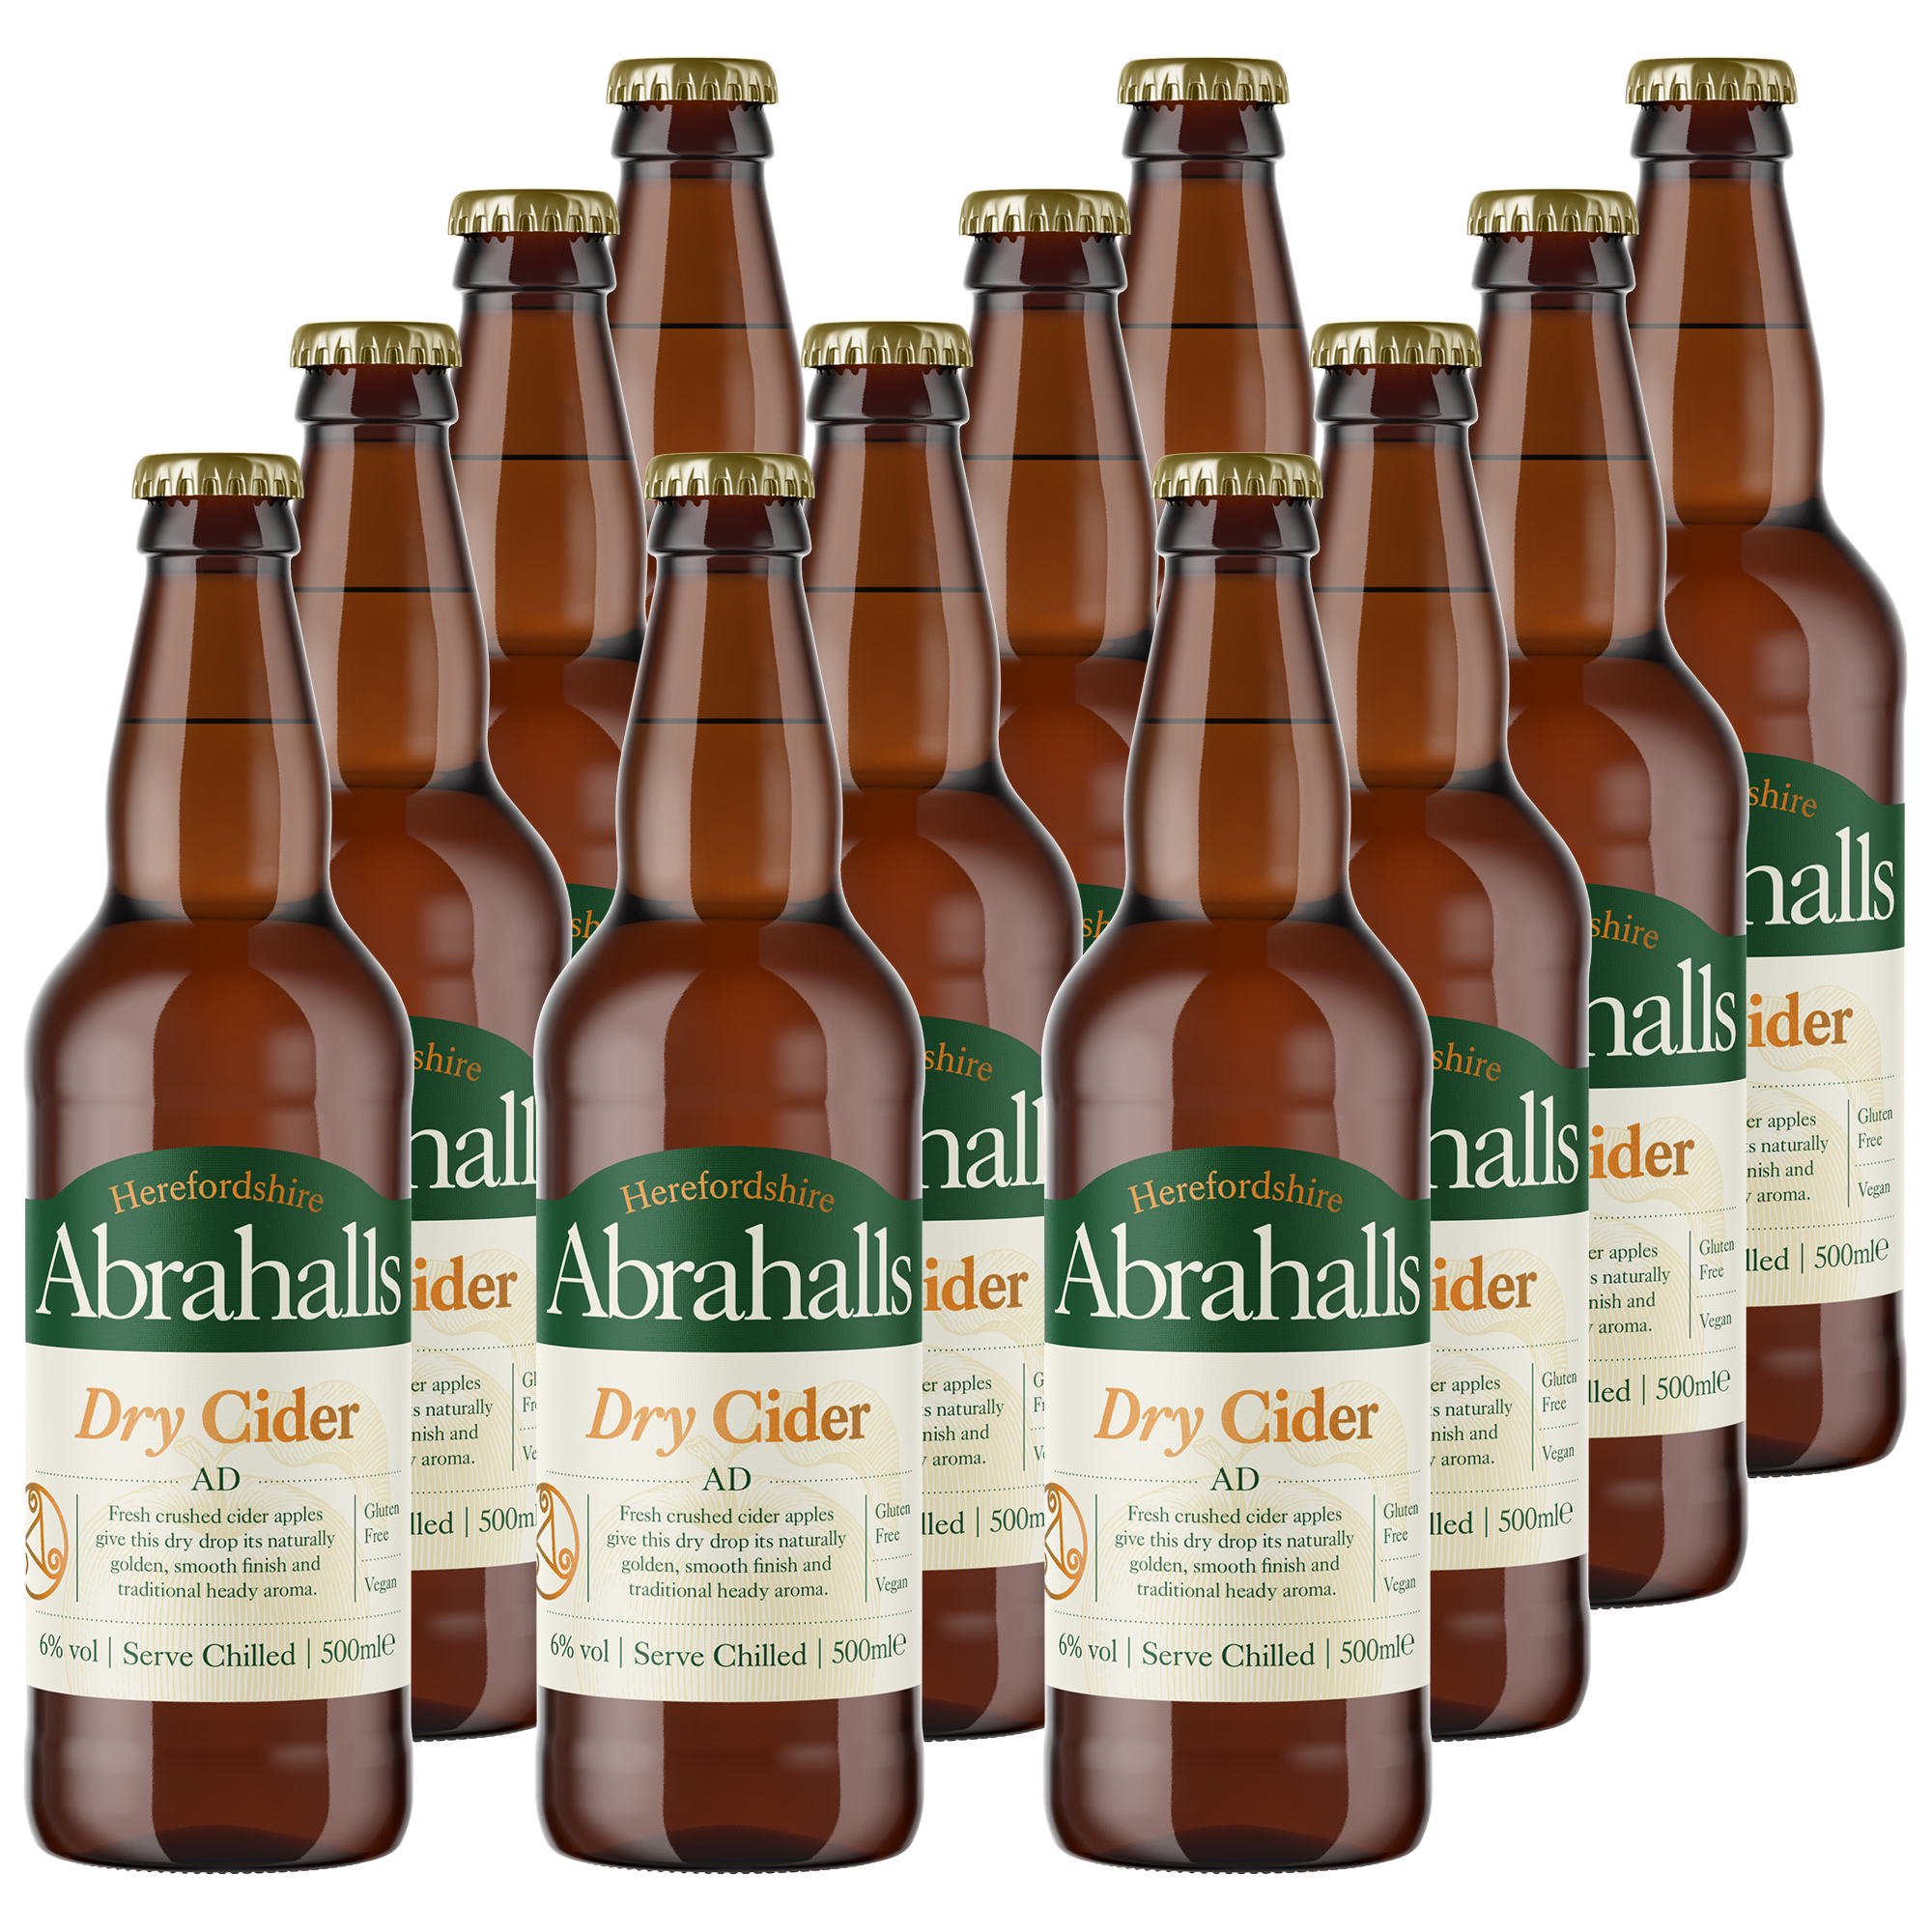 Abrahalls AD Dry Cider 12x500ml